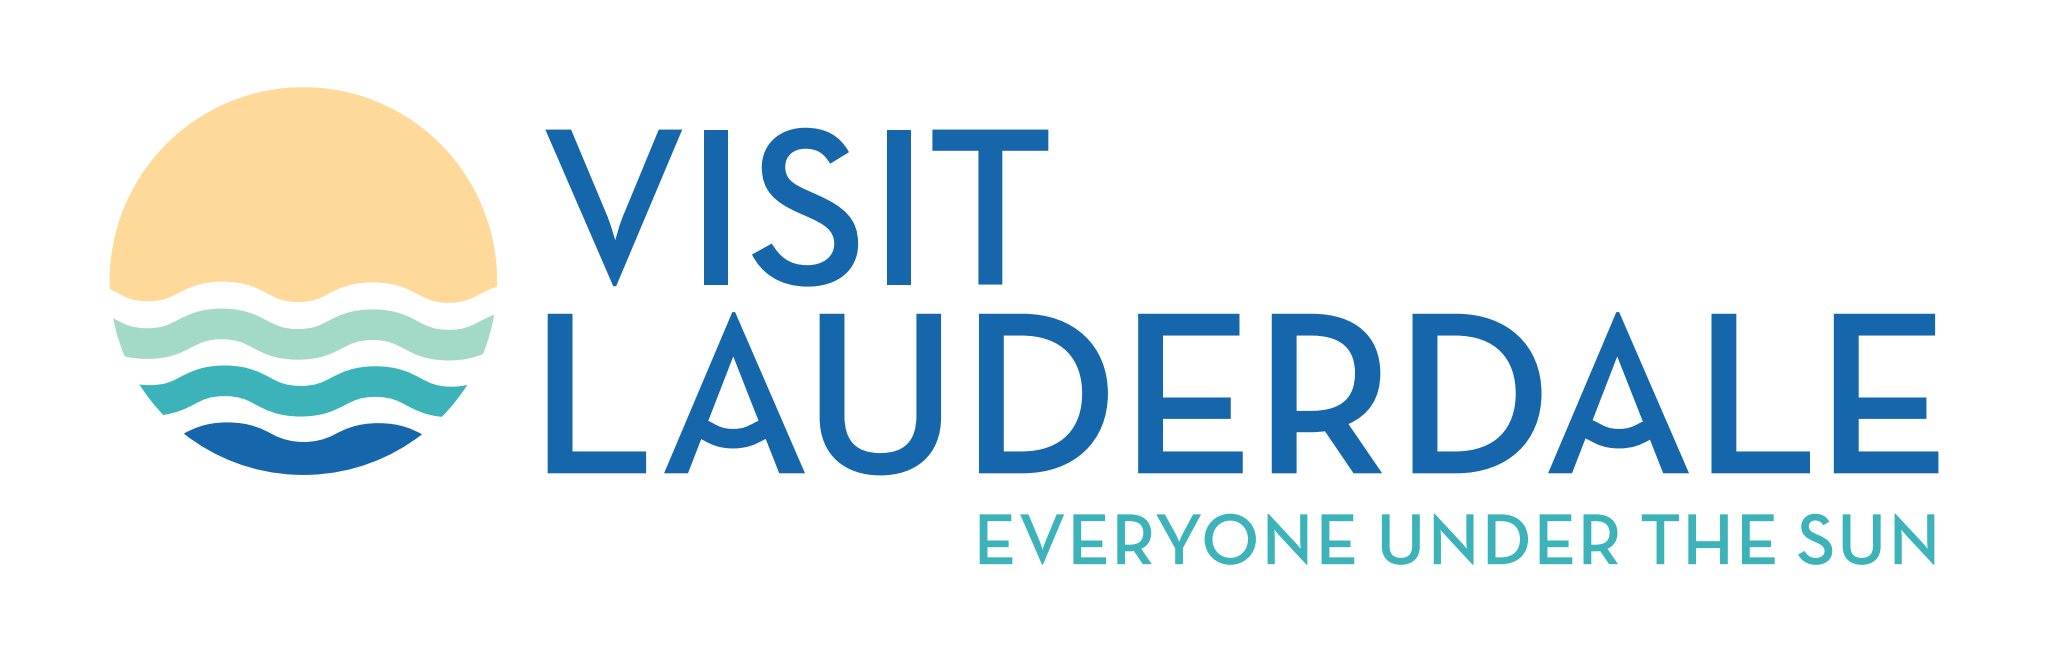 Visit Lauderdale Logo Kopie